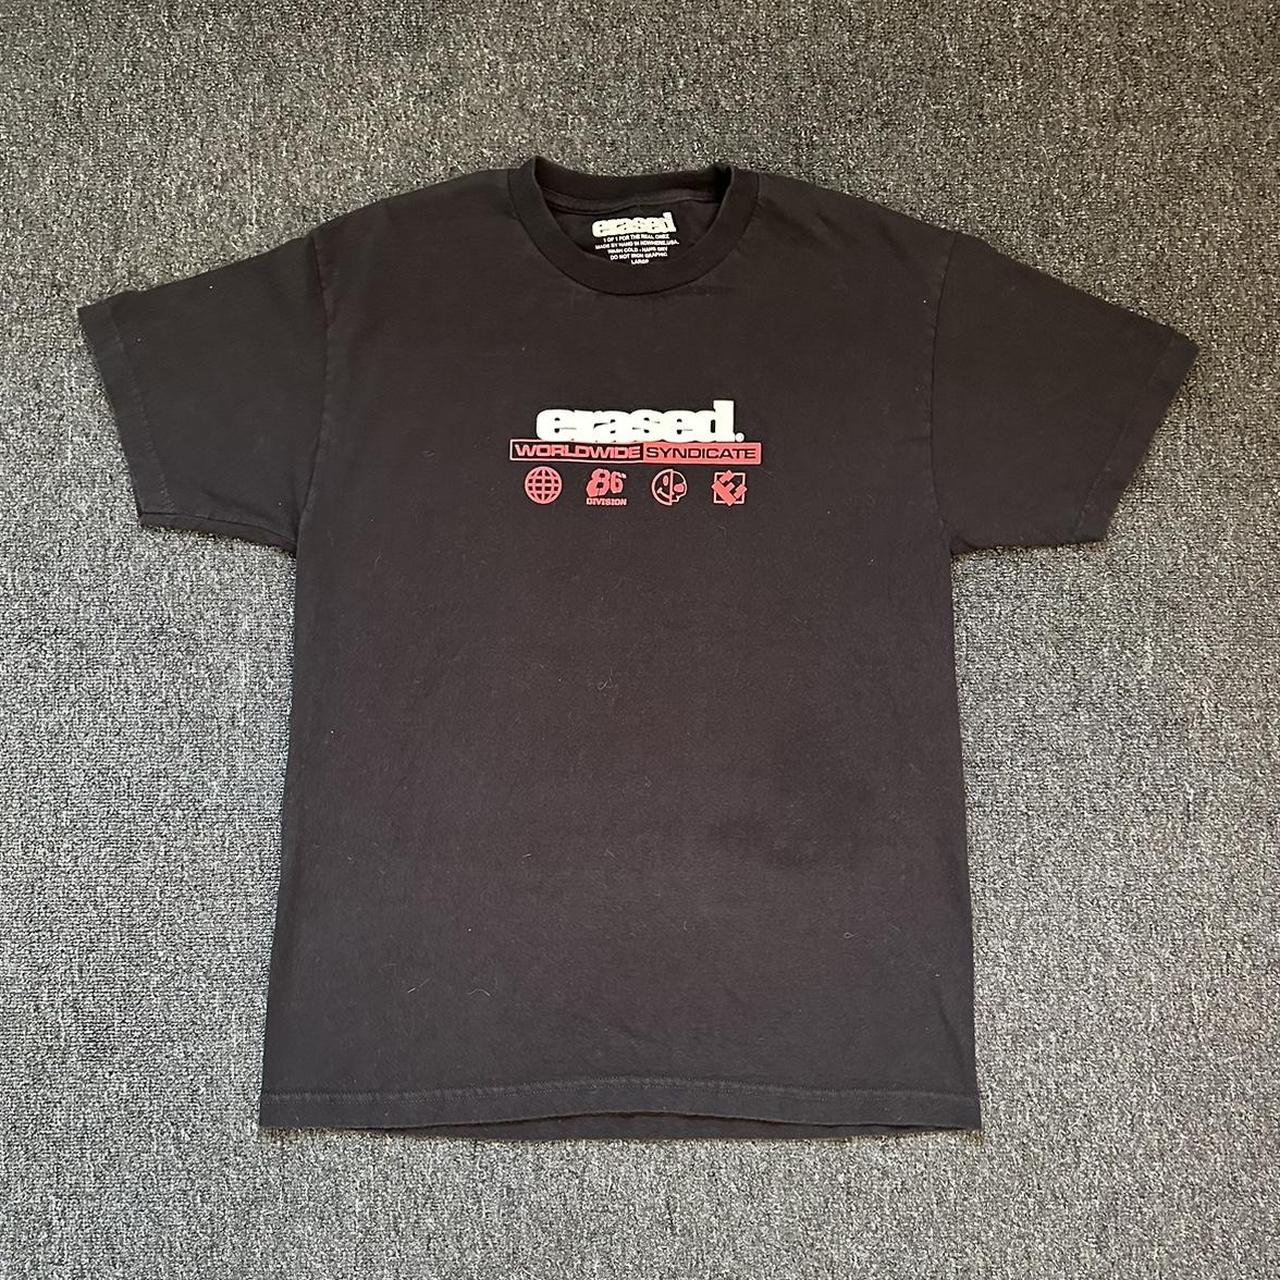 Erased Project Men's Black T-shirt